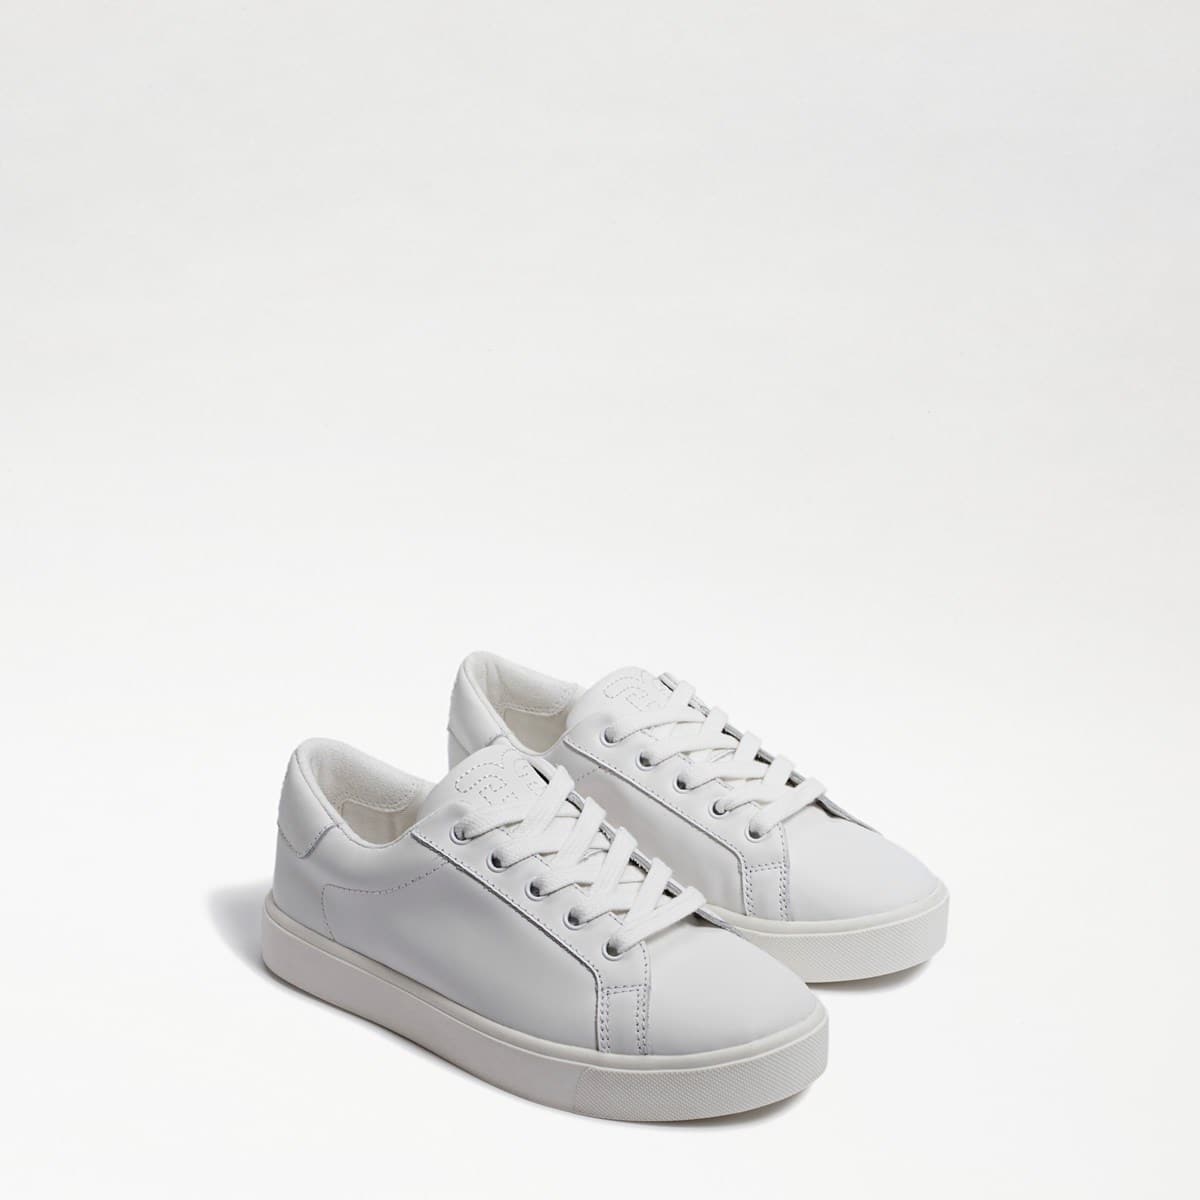 Sam Edelman Ethyl Kids Sneaker White Leather v5zULVtH